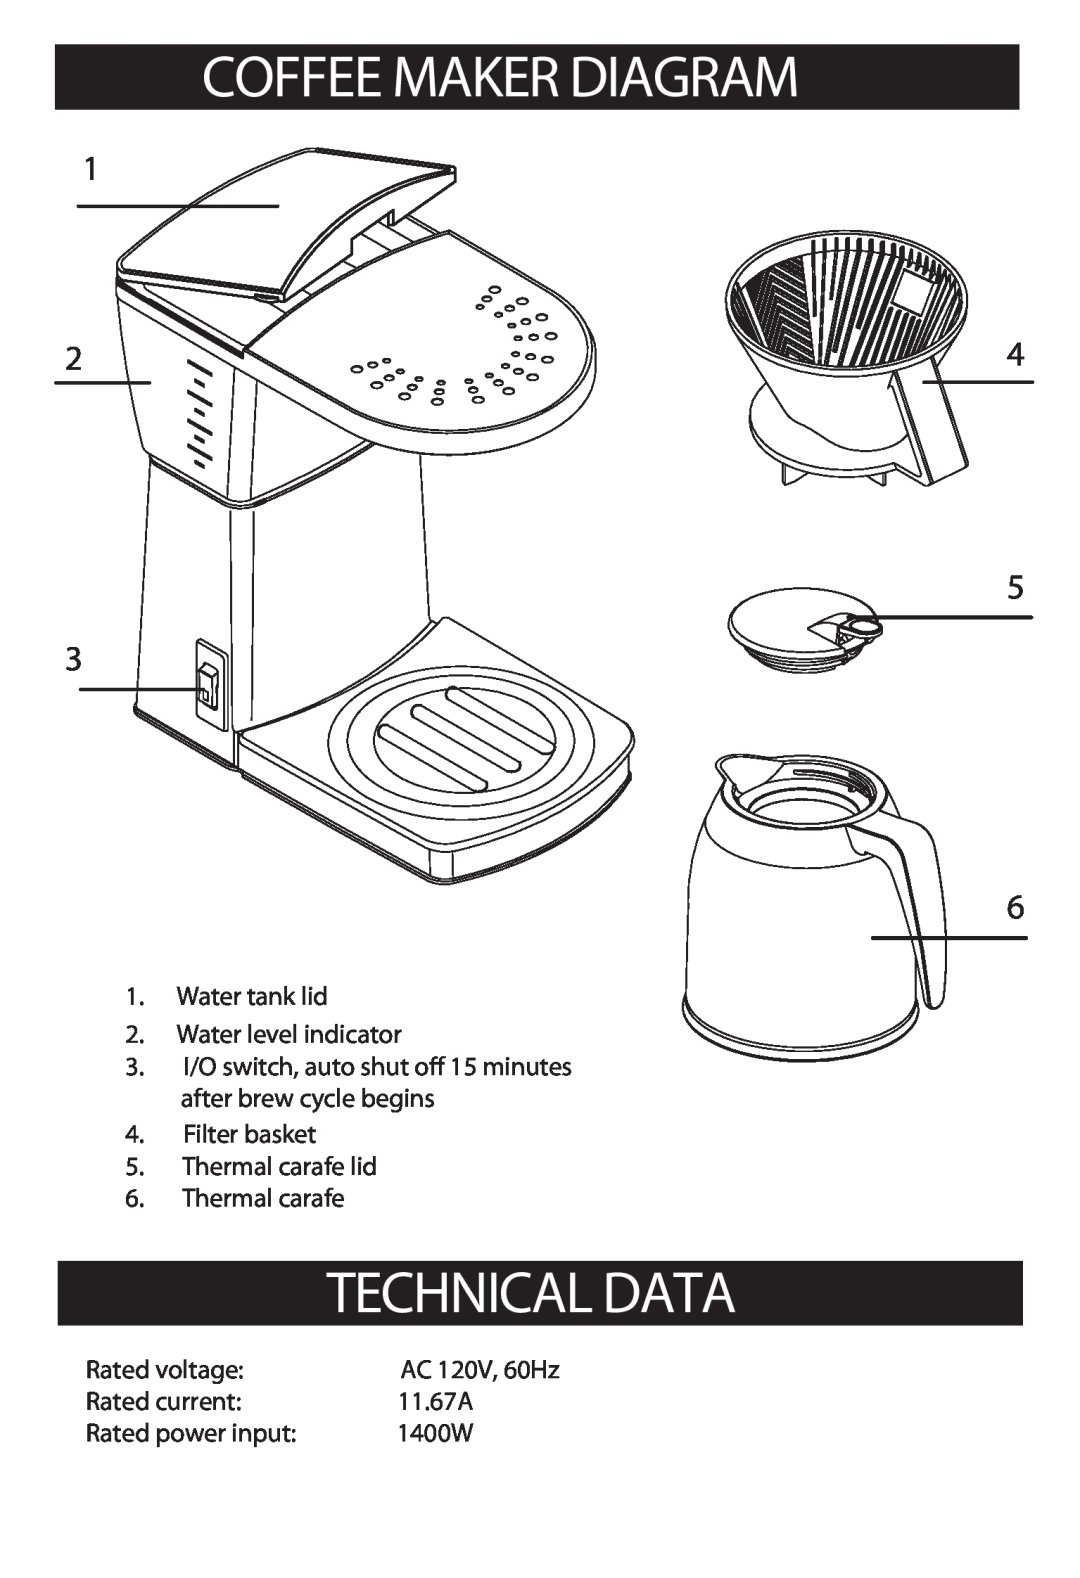 Bonavita BV1800TH Coffee Maker Diagram, Technical Data, Water tank lid 2.Water level indicator, Thermal carafe, 11.67A 